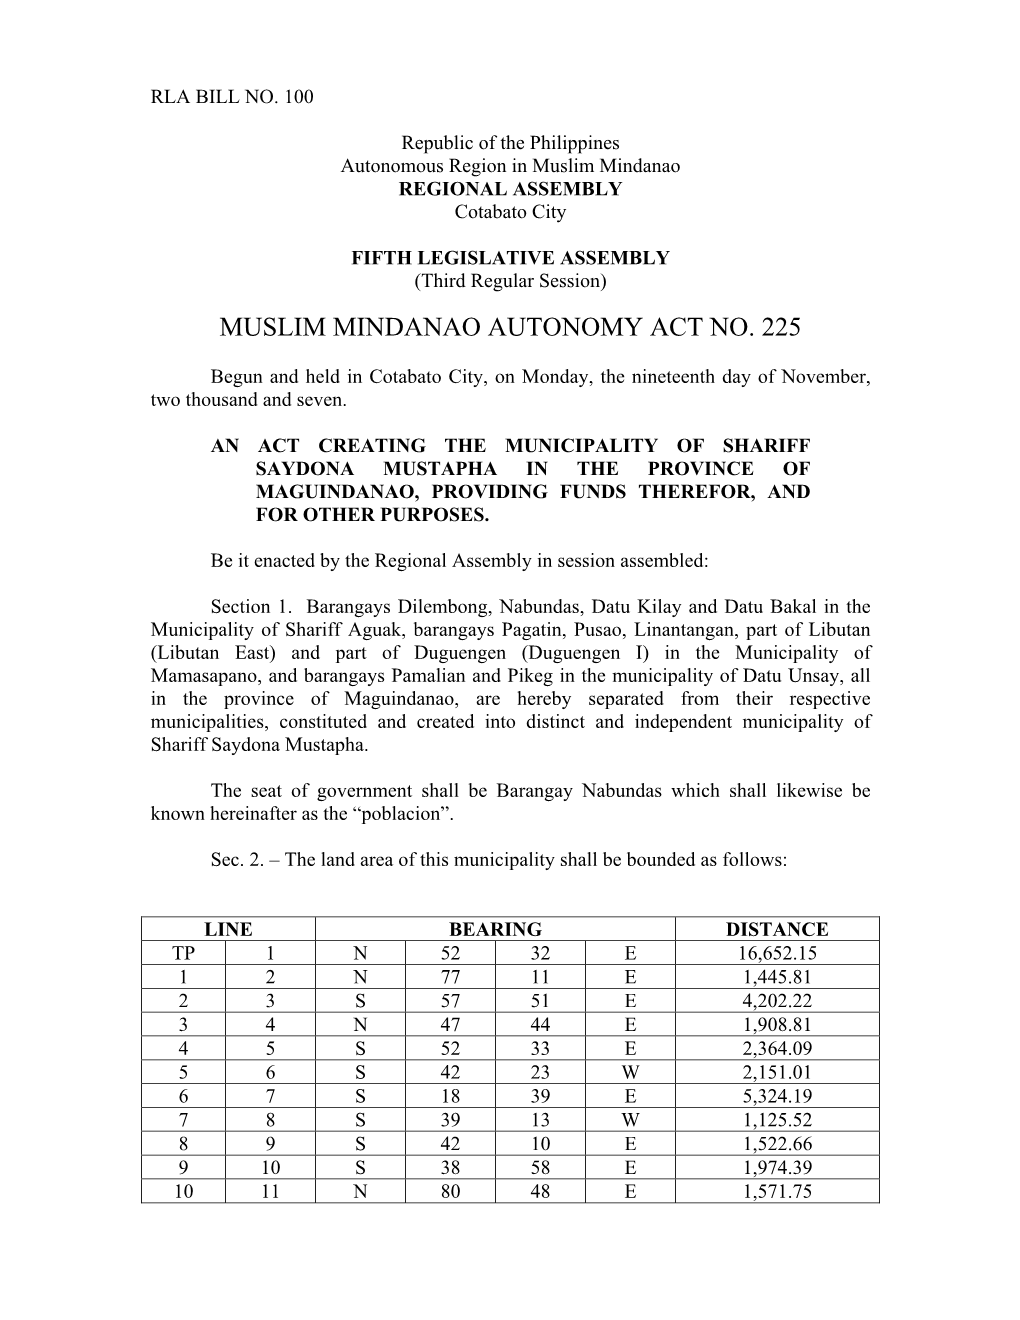 Muslim Mindanao Autonomy Act No. 225